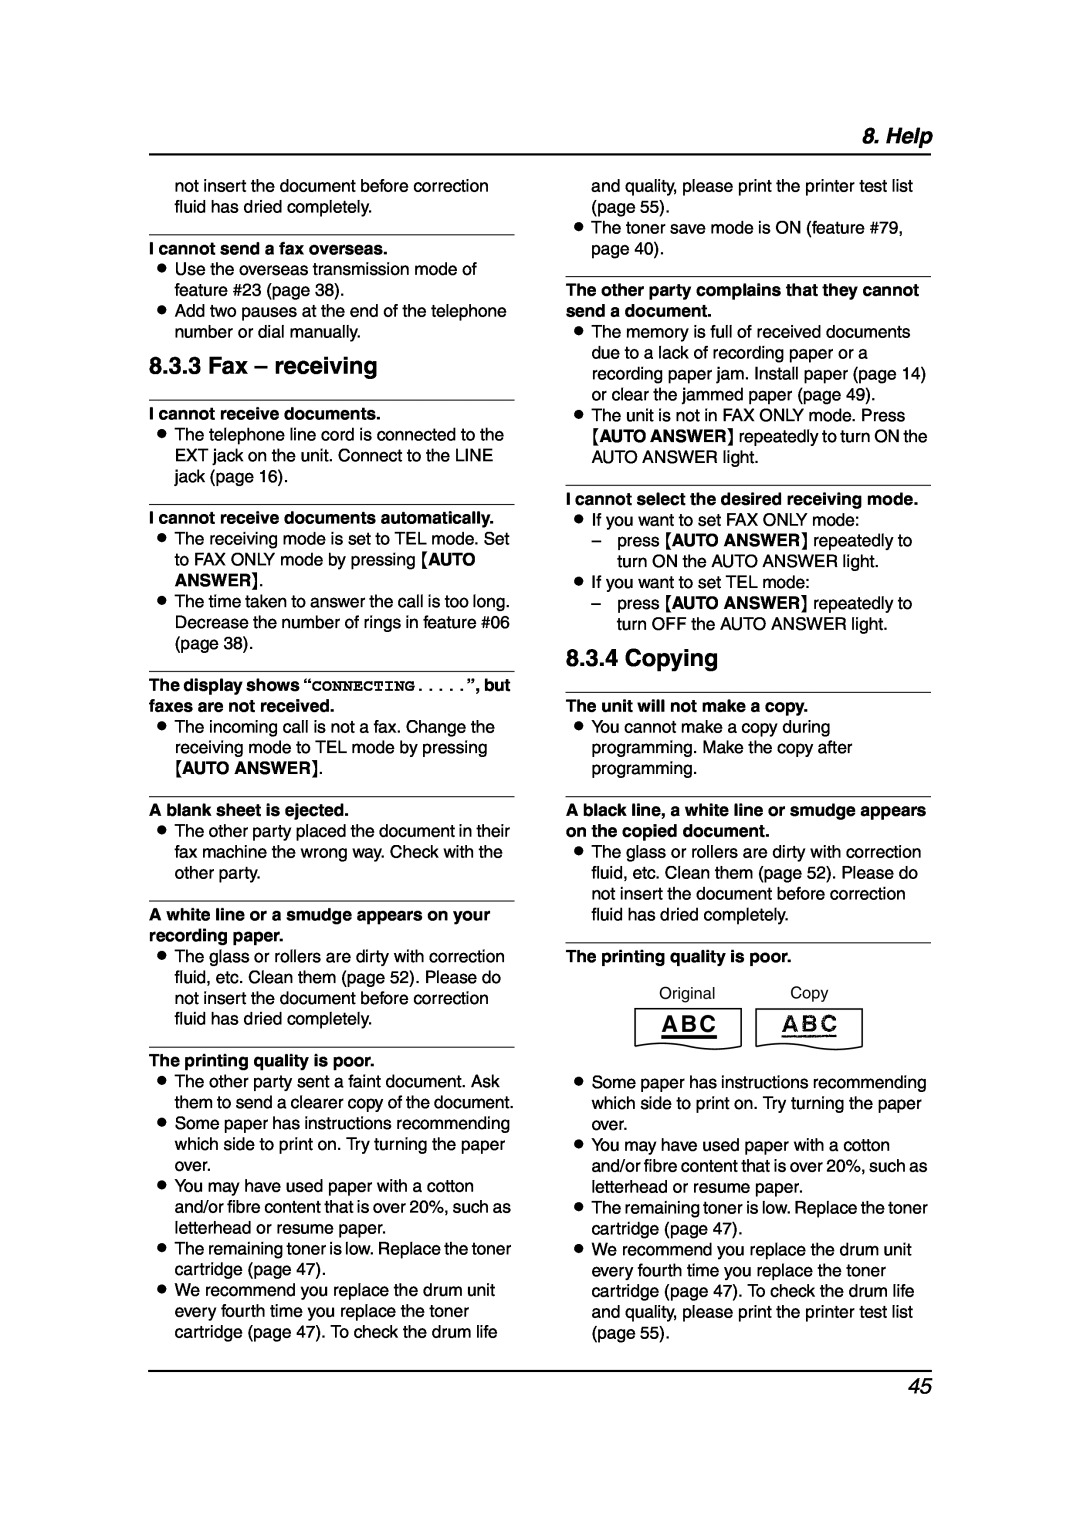 Panasonic KX-FL511AL manual Fax - receiving, Copying, A B C, Help 